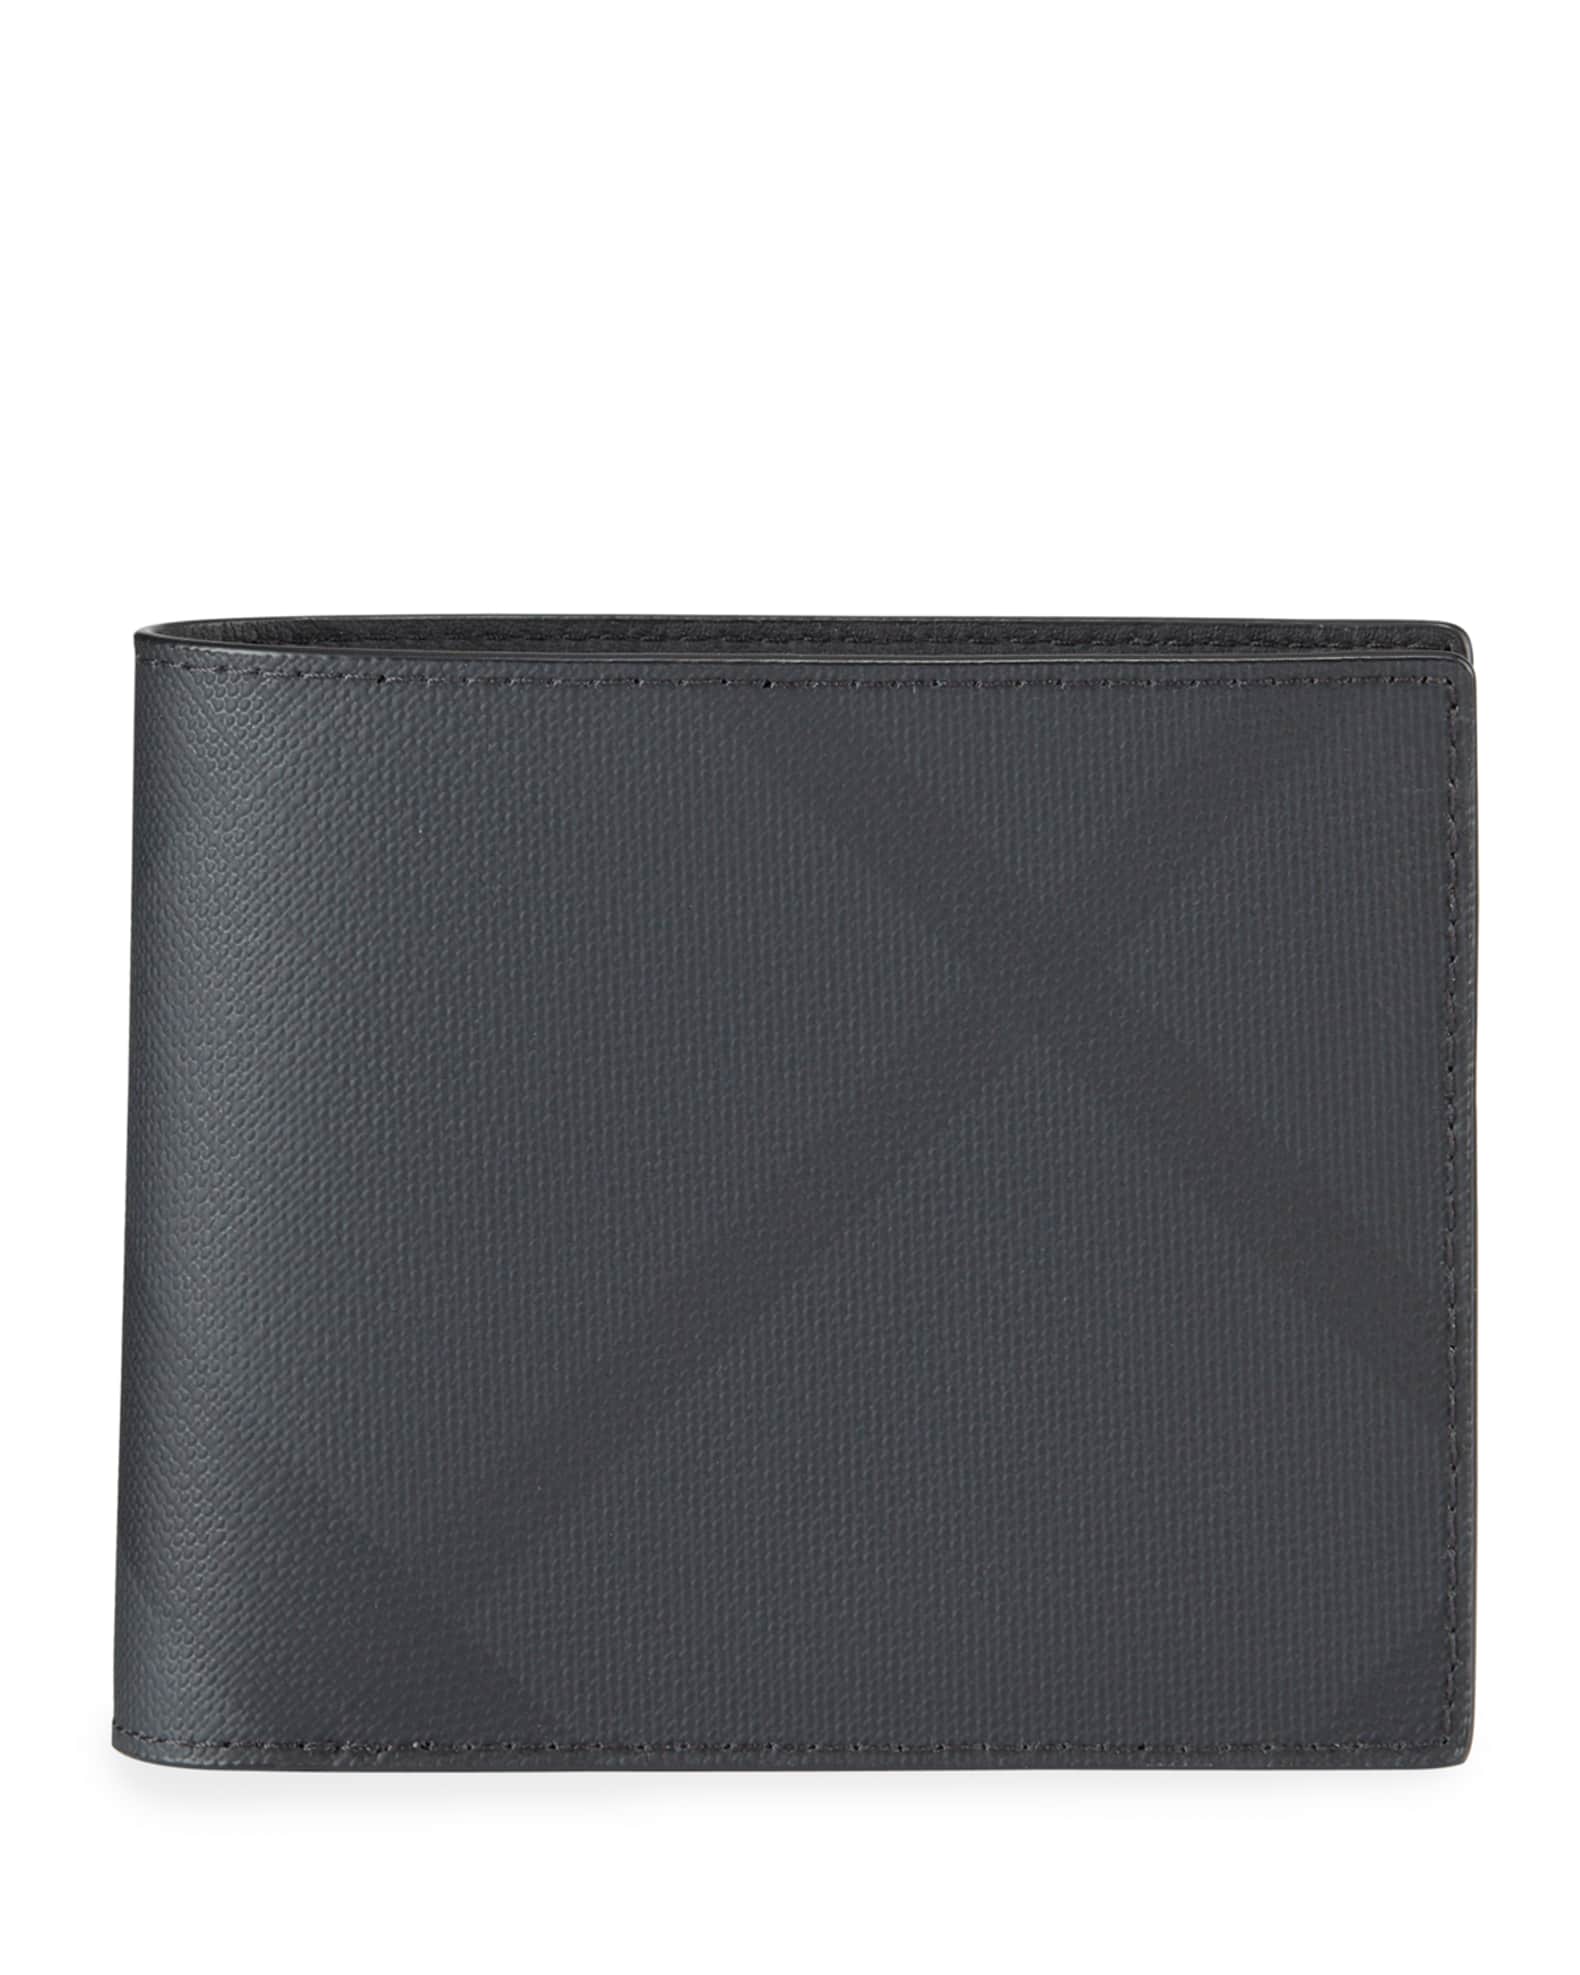 Burberry Men's Ronan London Check Wallet | Neiman Marcus